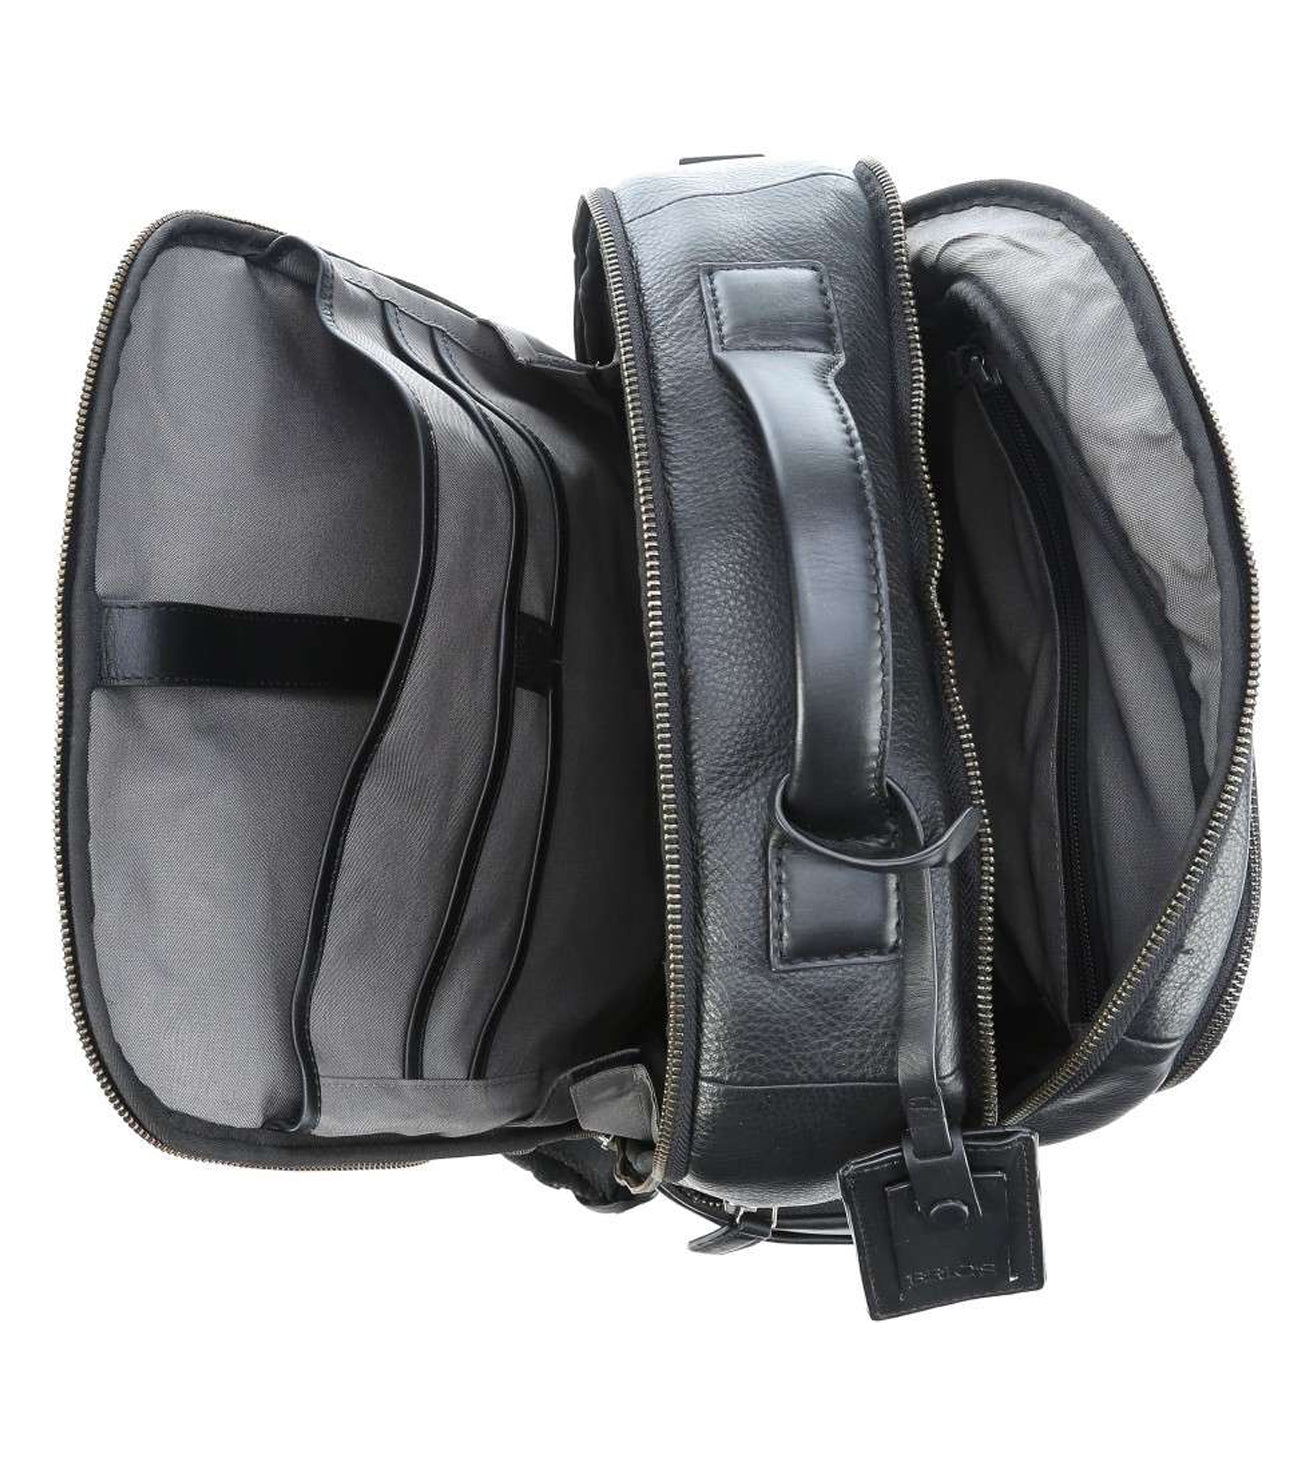 Bric's Torino Unisex Black Backpack